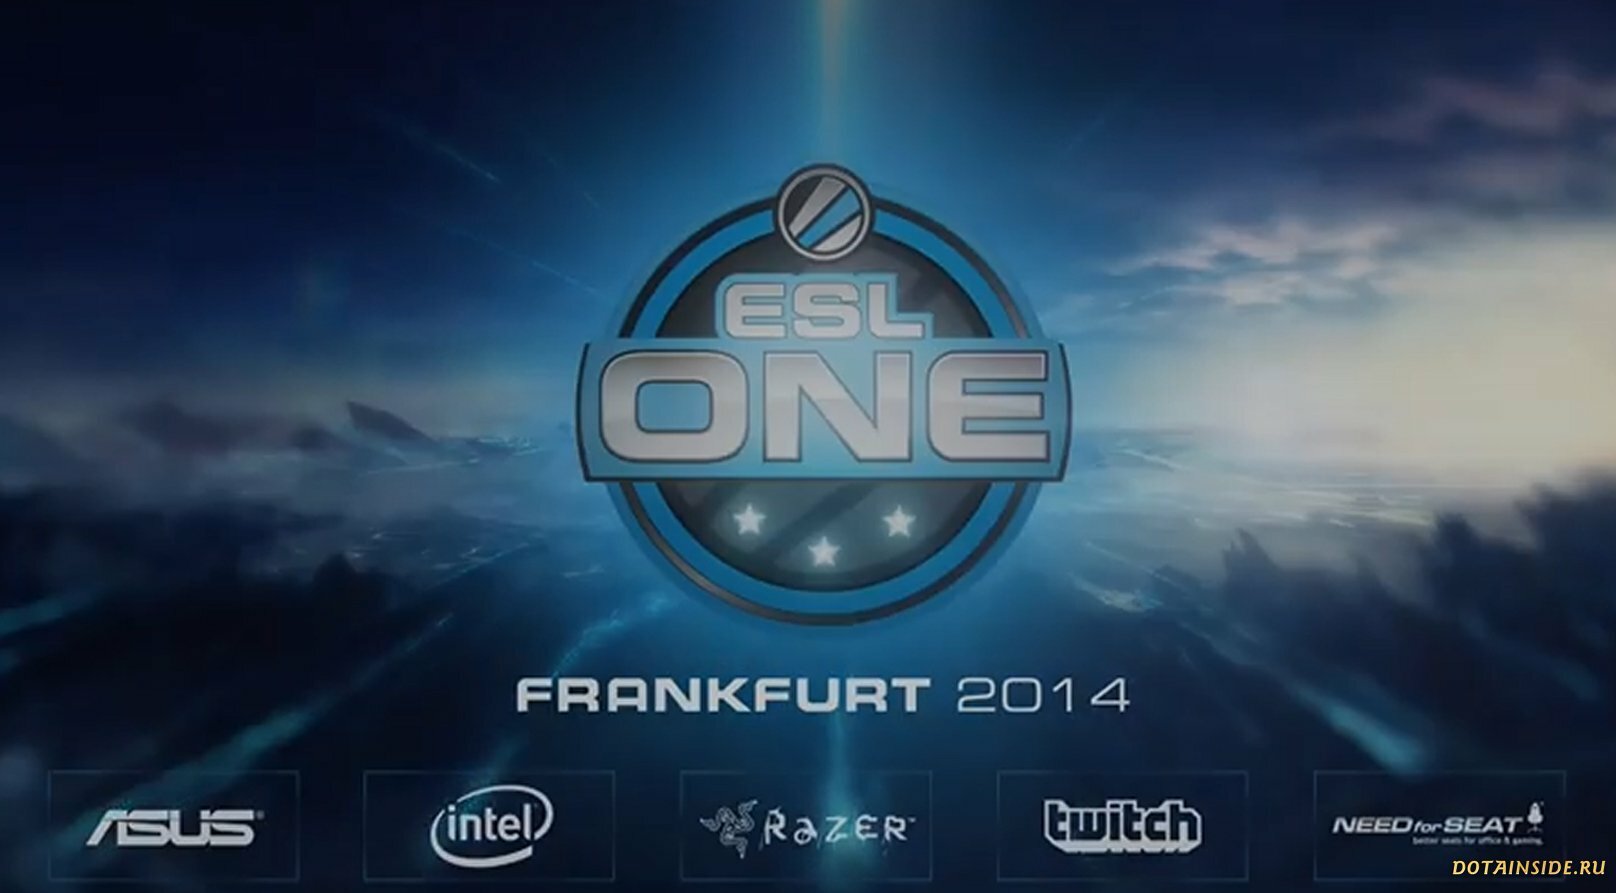   ESL One Frankfurt 2014